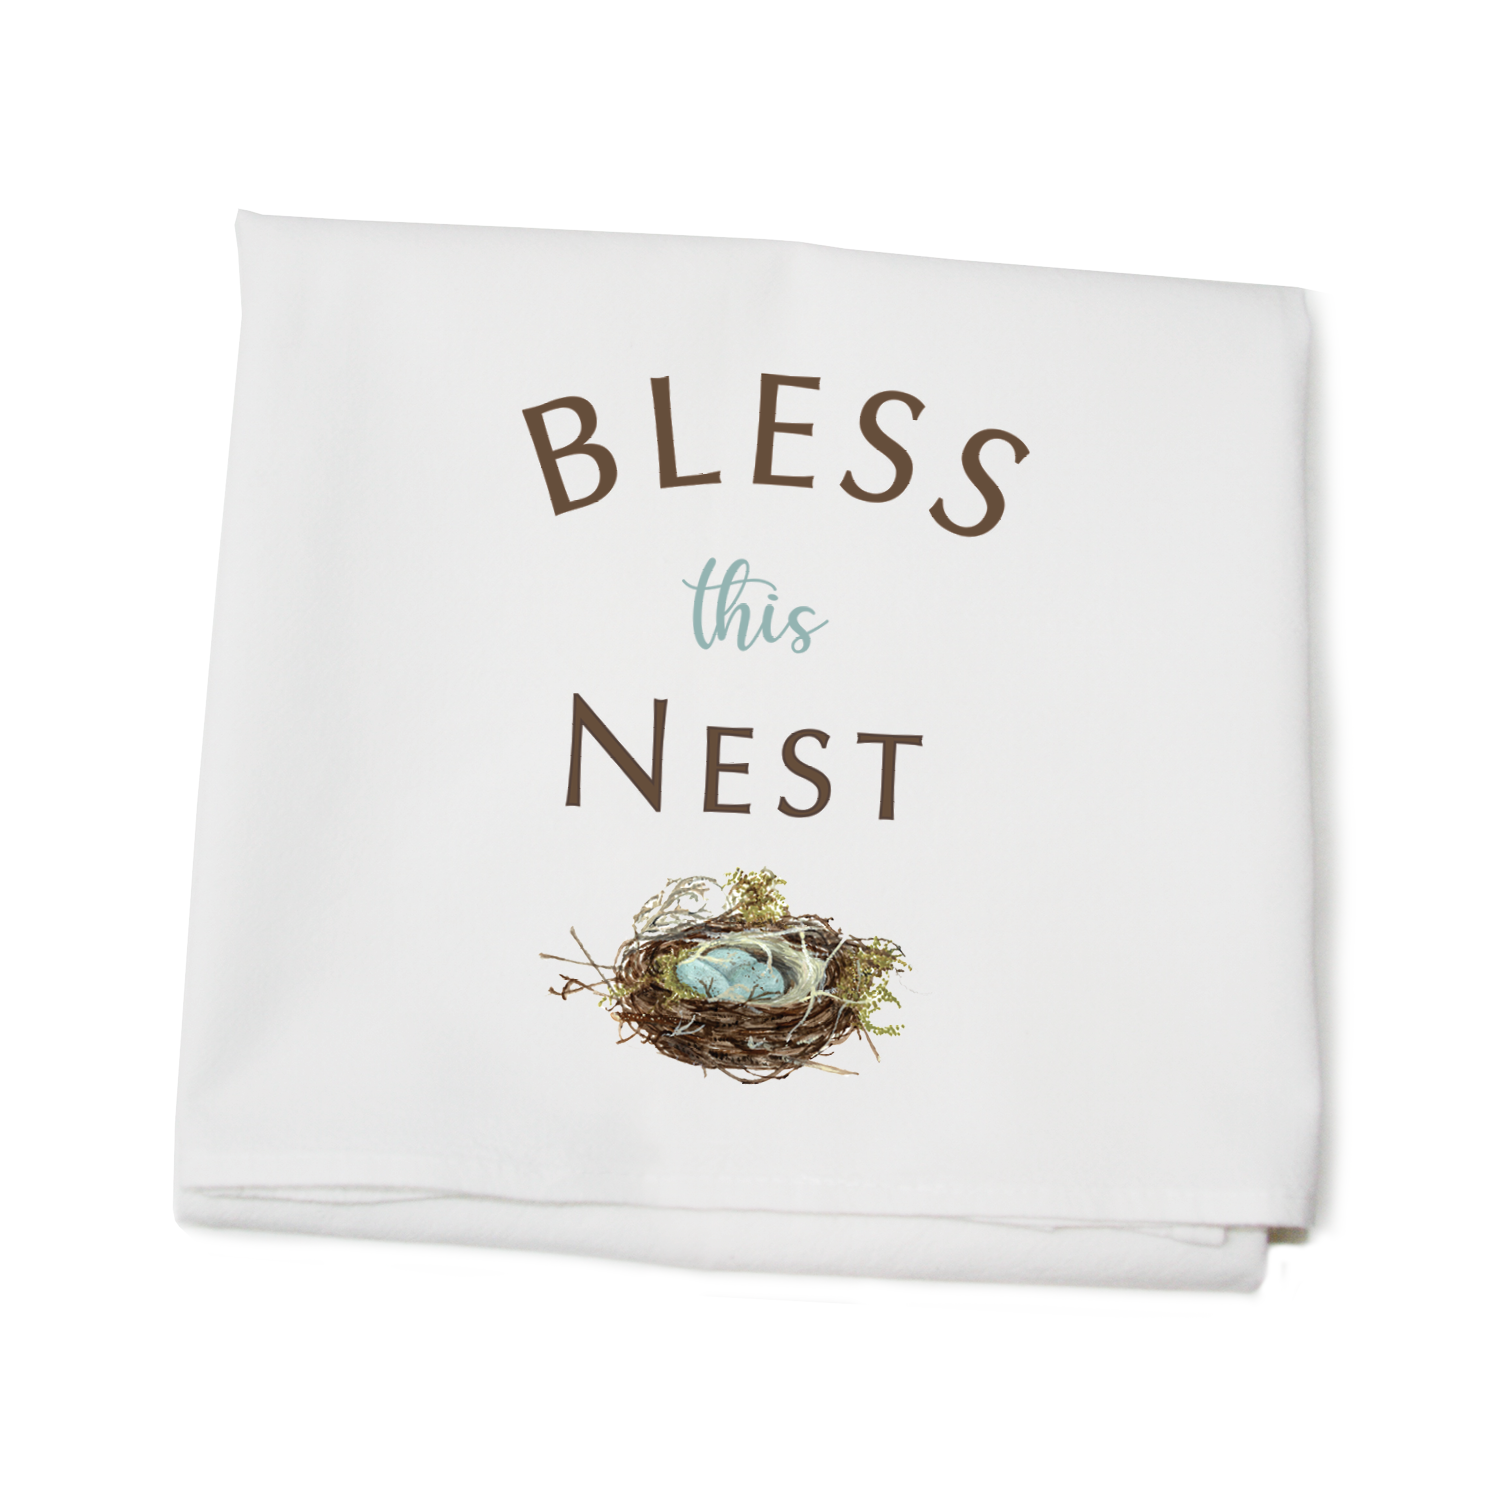 bless this nest flour sack towel